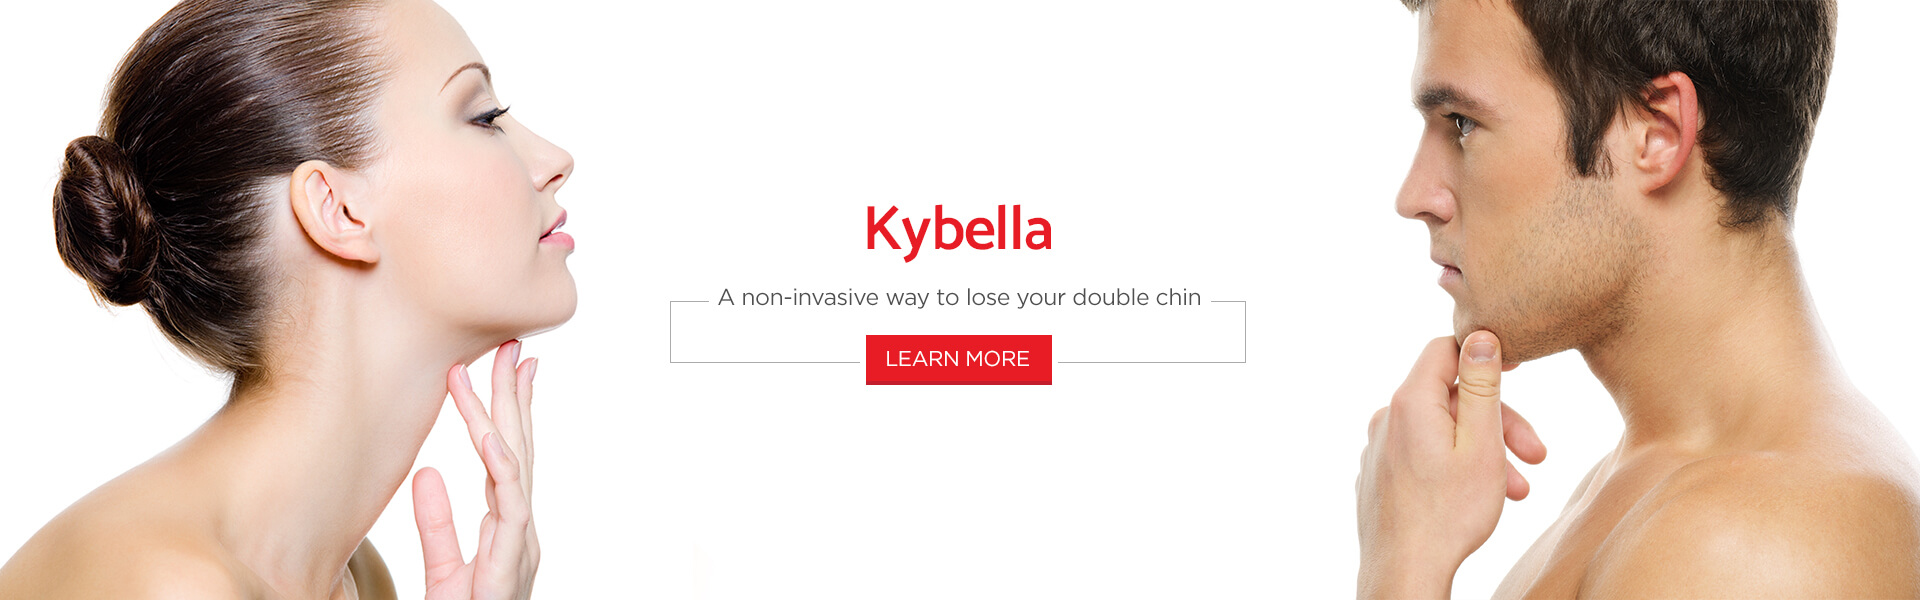 kybellaSlide